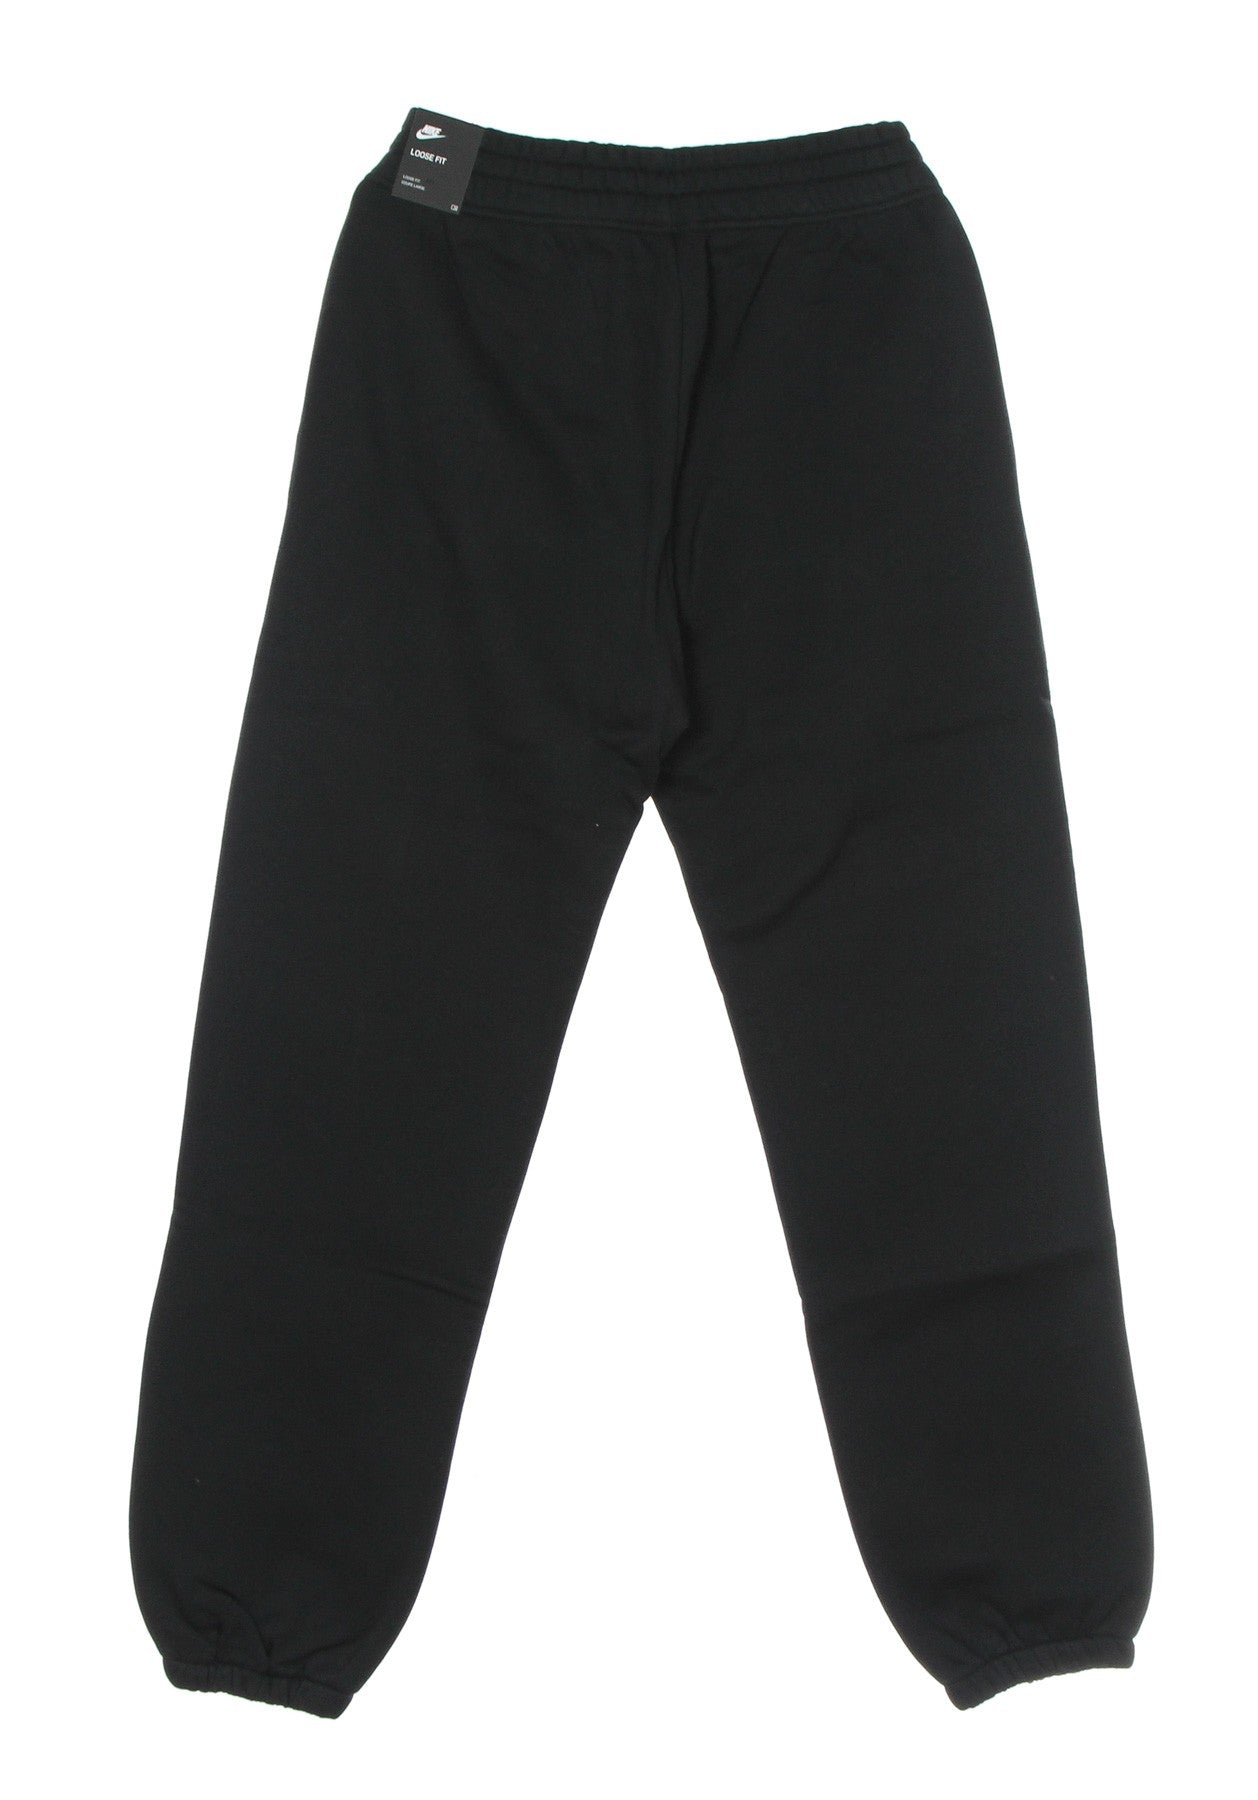 Pantalone Tuta Felpato Donna Essential Trend Black/white BV4089